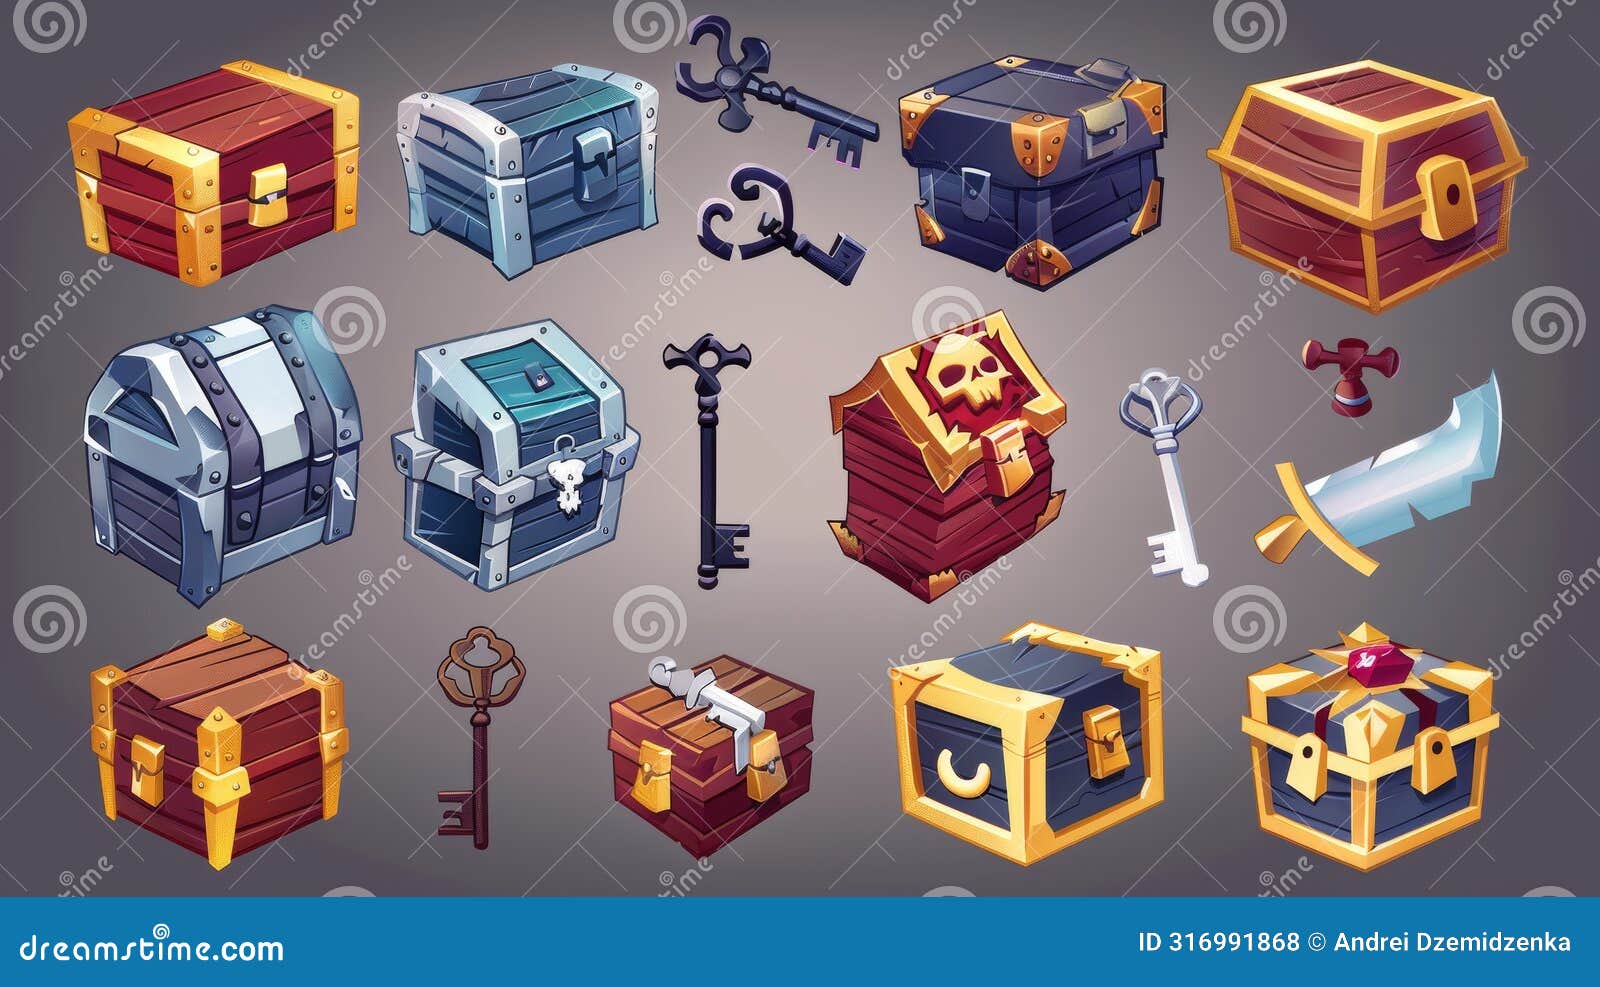 rare treasure chests and keys evolution, trophy trunks and skeleton keys, level bonus, pirate loot, fantasy assets